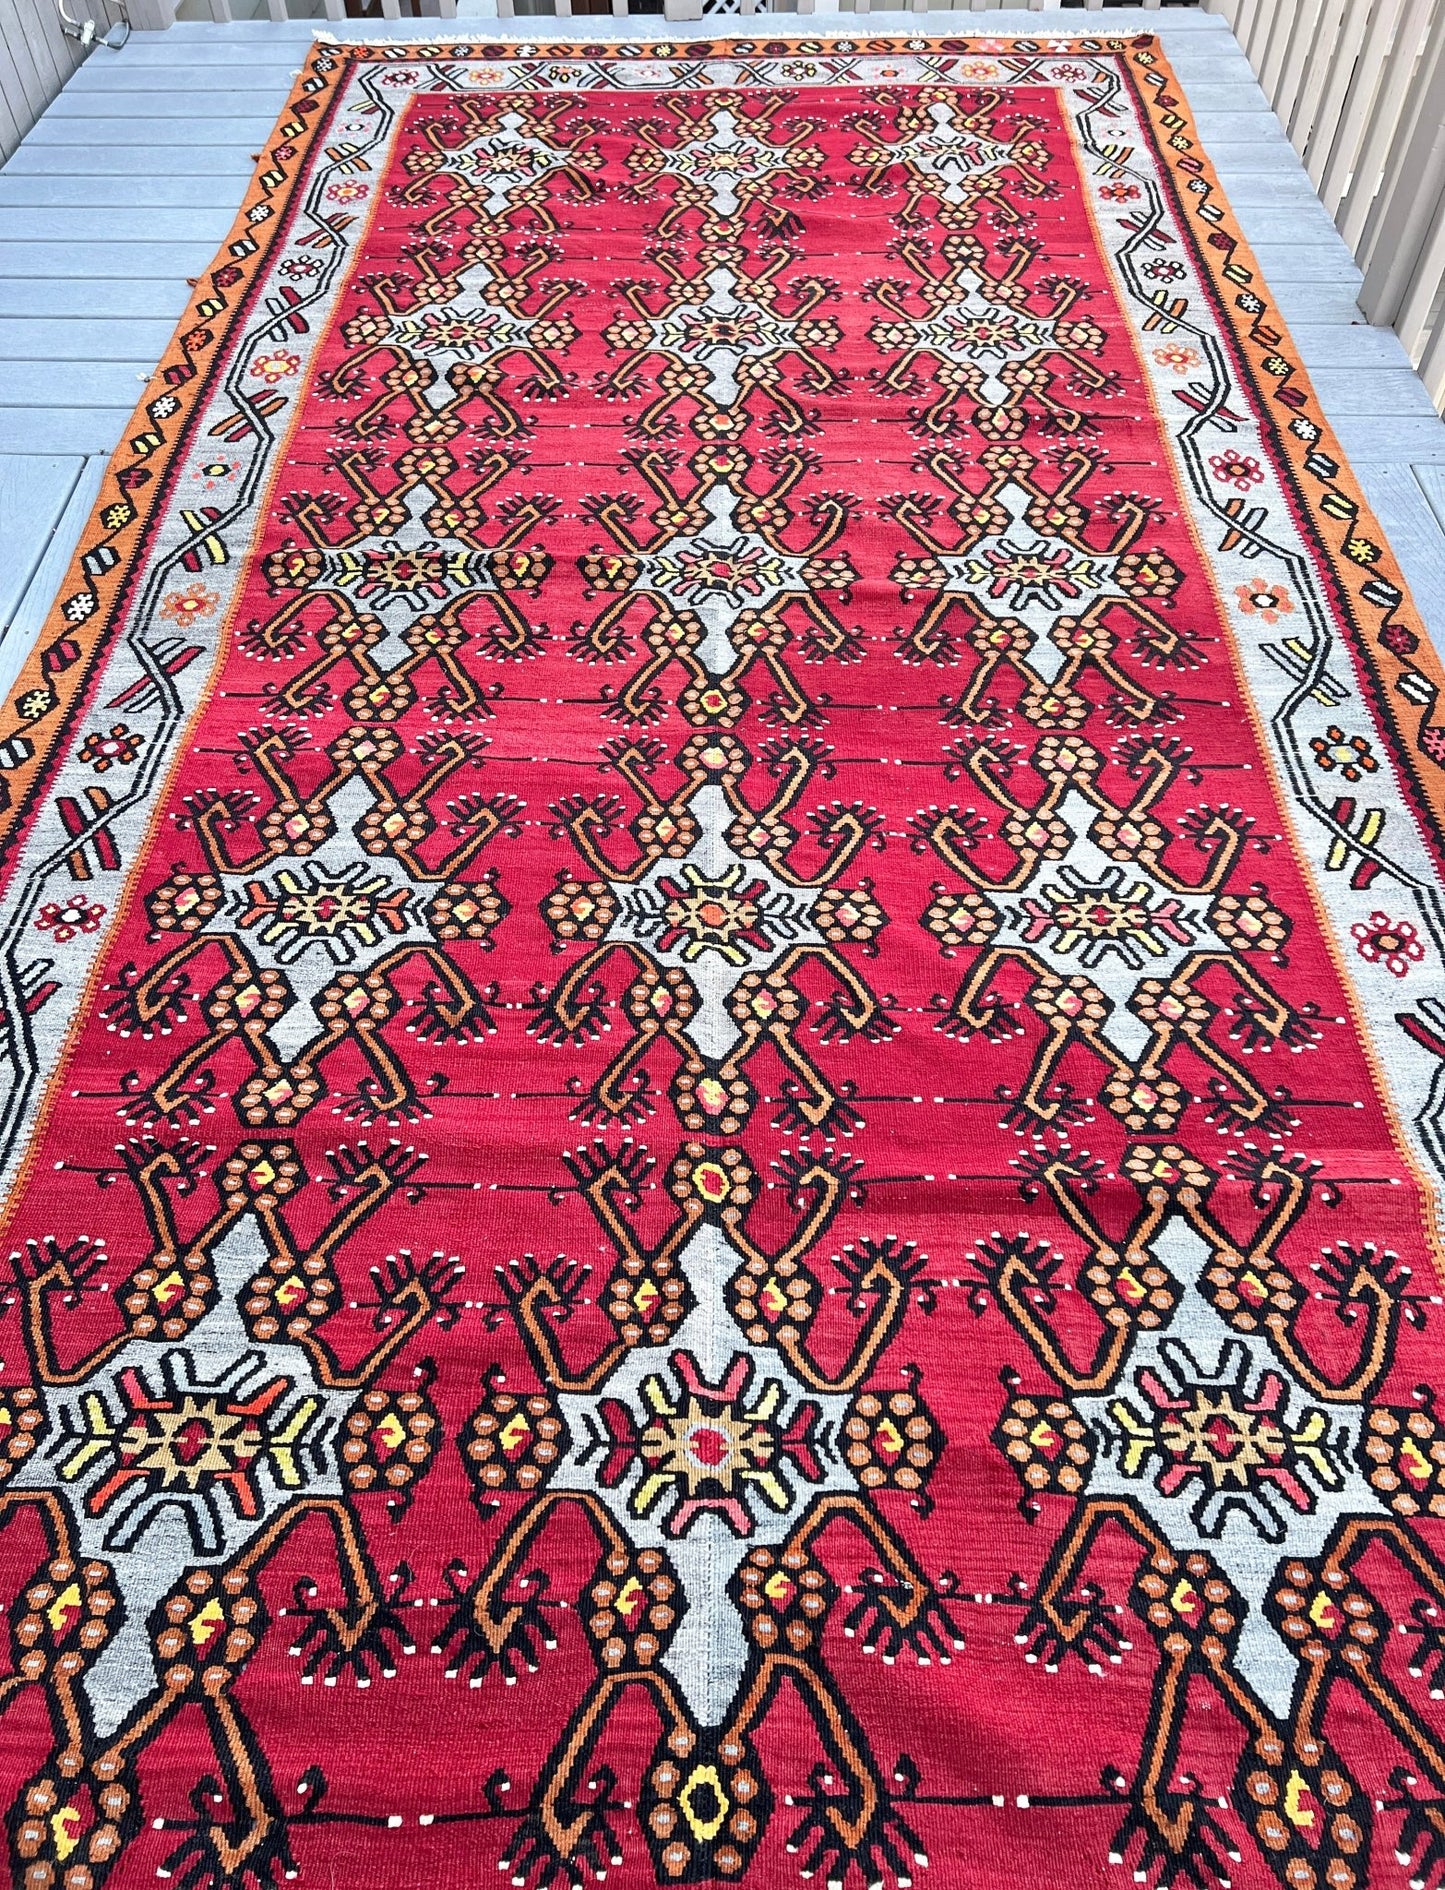 Red Turkish wide runner Kilim Rug shop Berkeley San Francisco Bay Area. Oriental Rug store. Buy rugs online free shipping